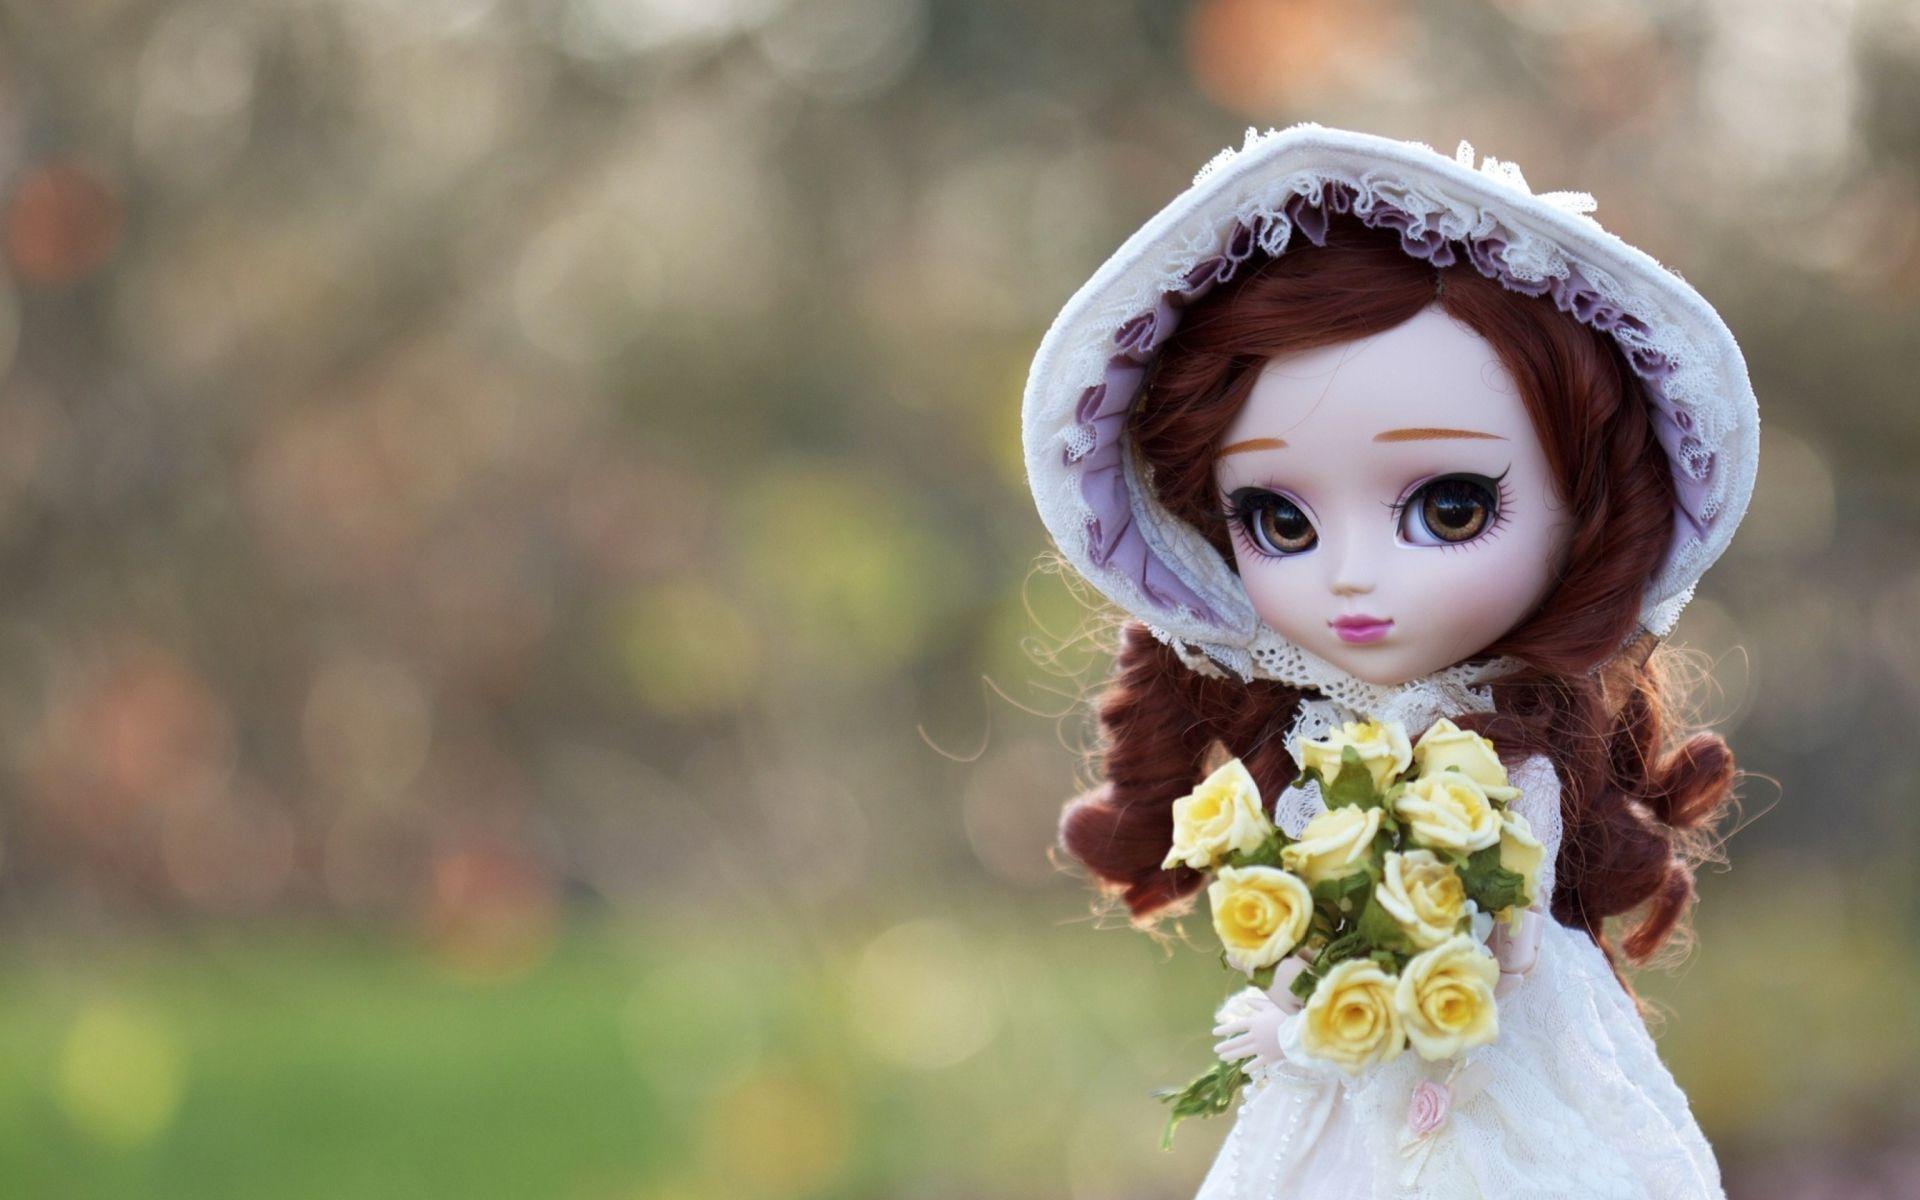 Cute Barbie Doll image. Beautiful image HD Picture & Desktop